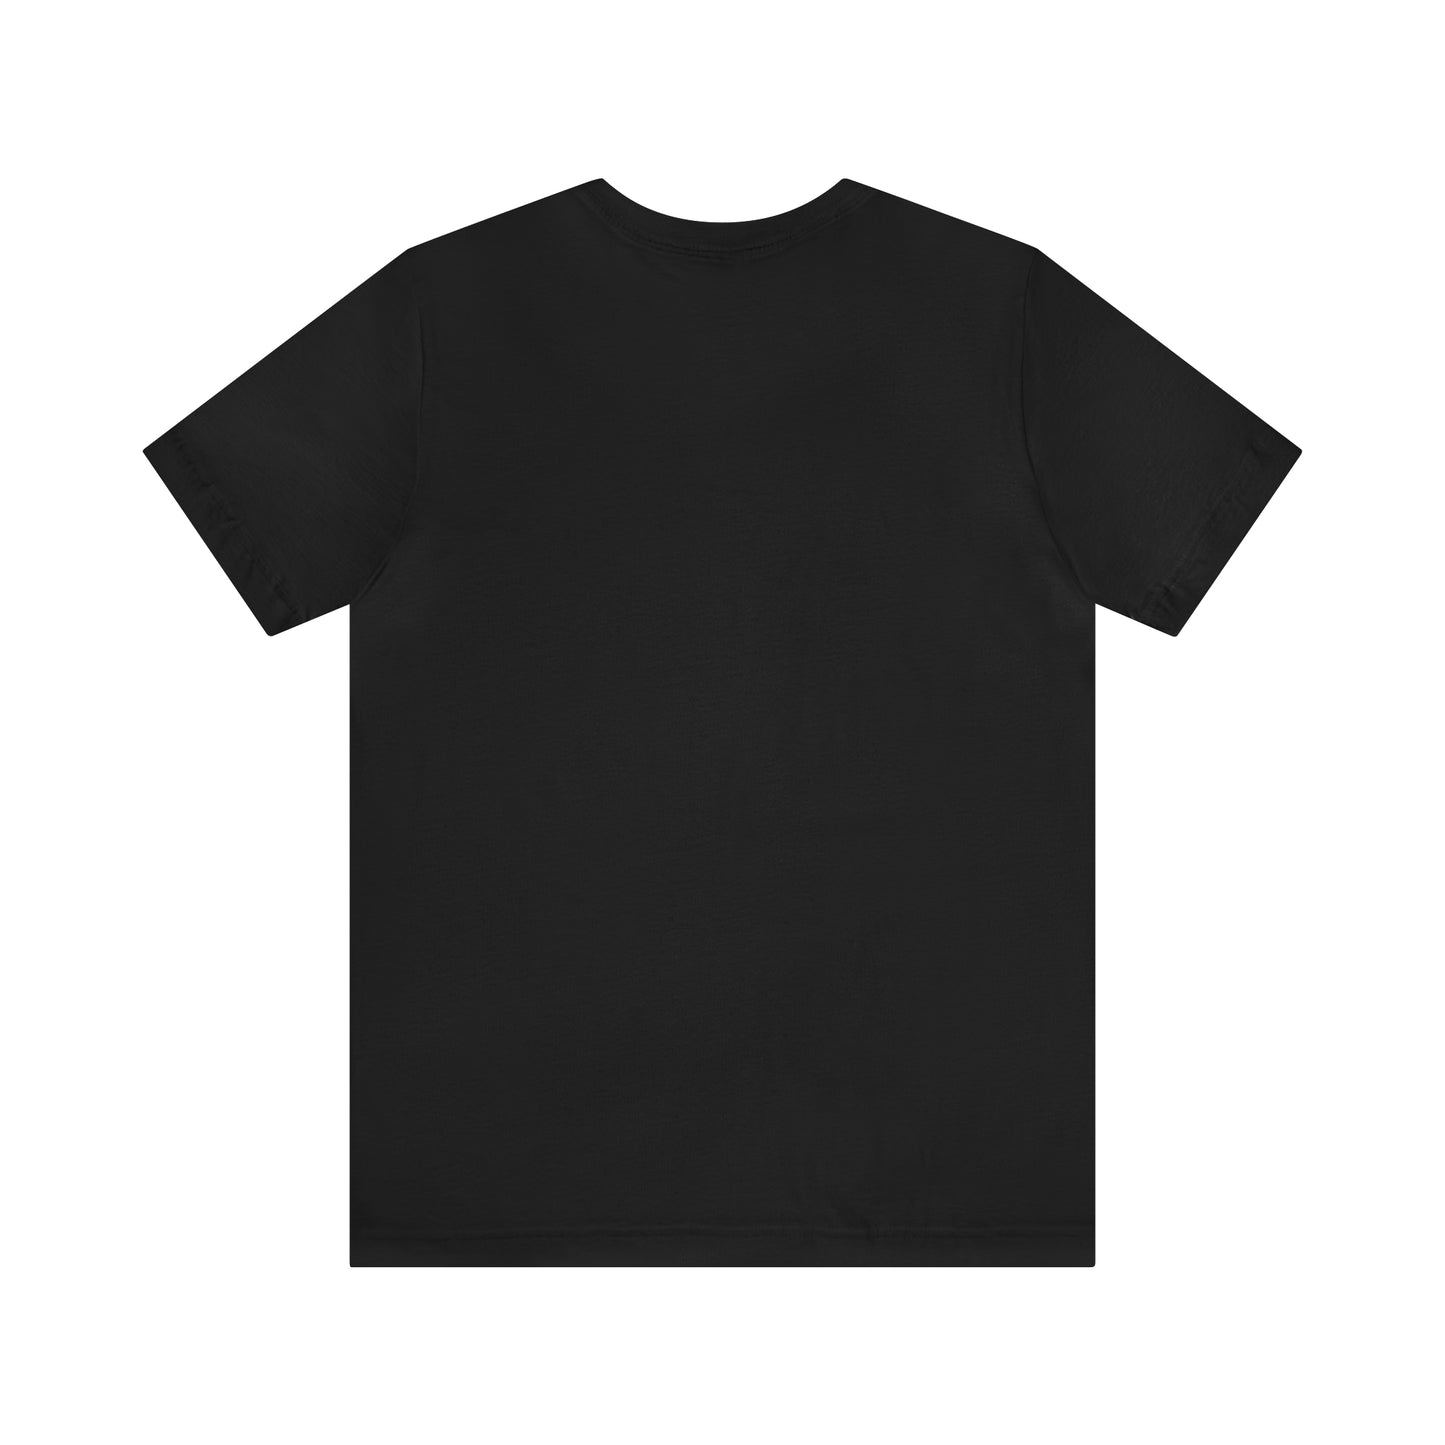 Andover, Mass Pickleball Short Sleeve T-Shirt